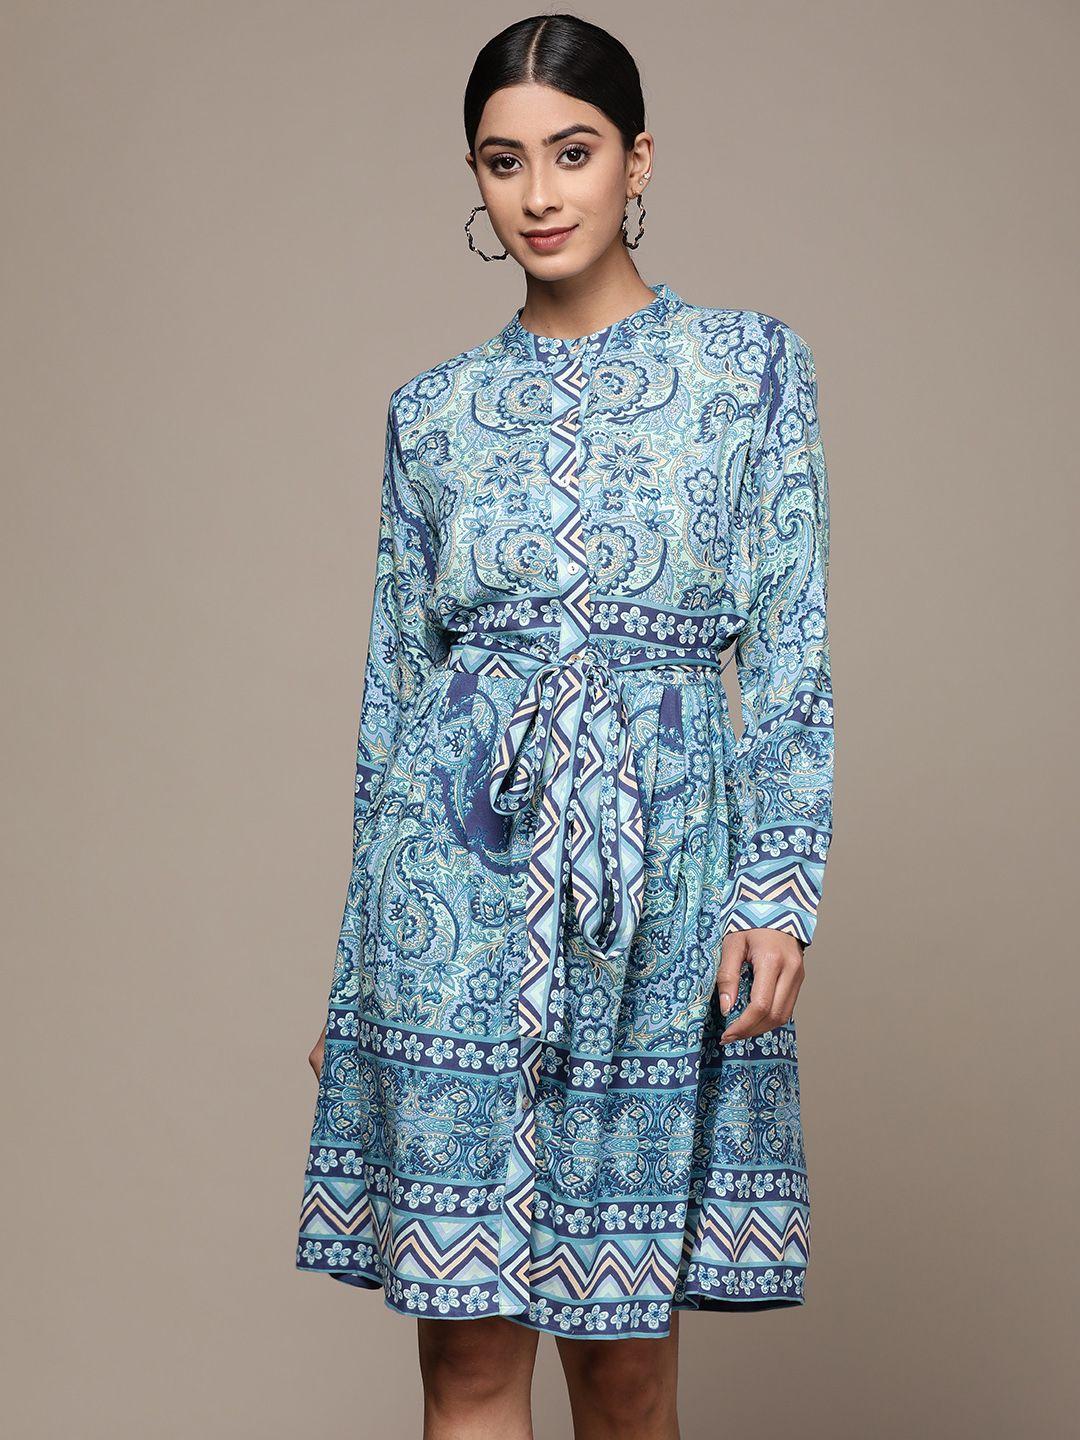 label ritu kumar blue floral a-line dress